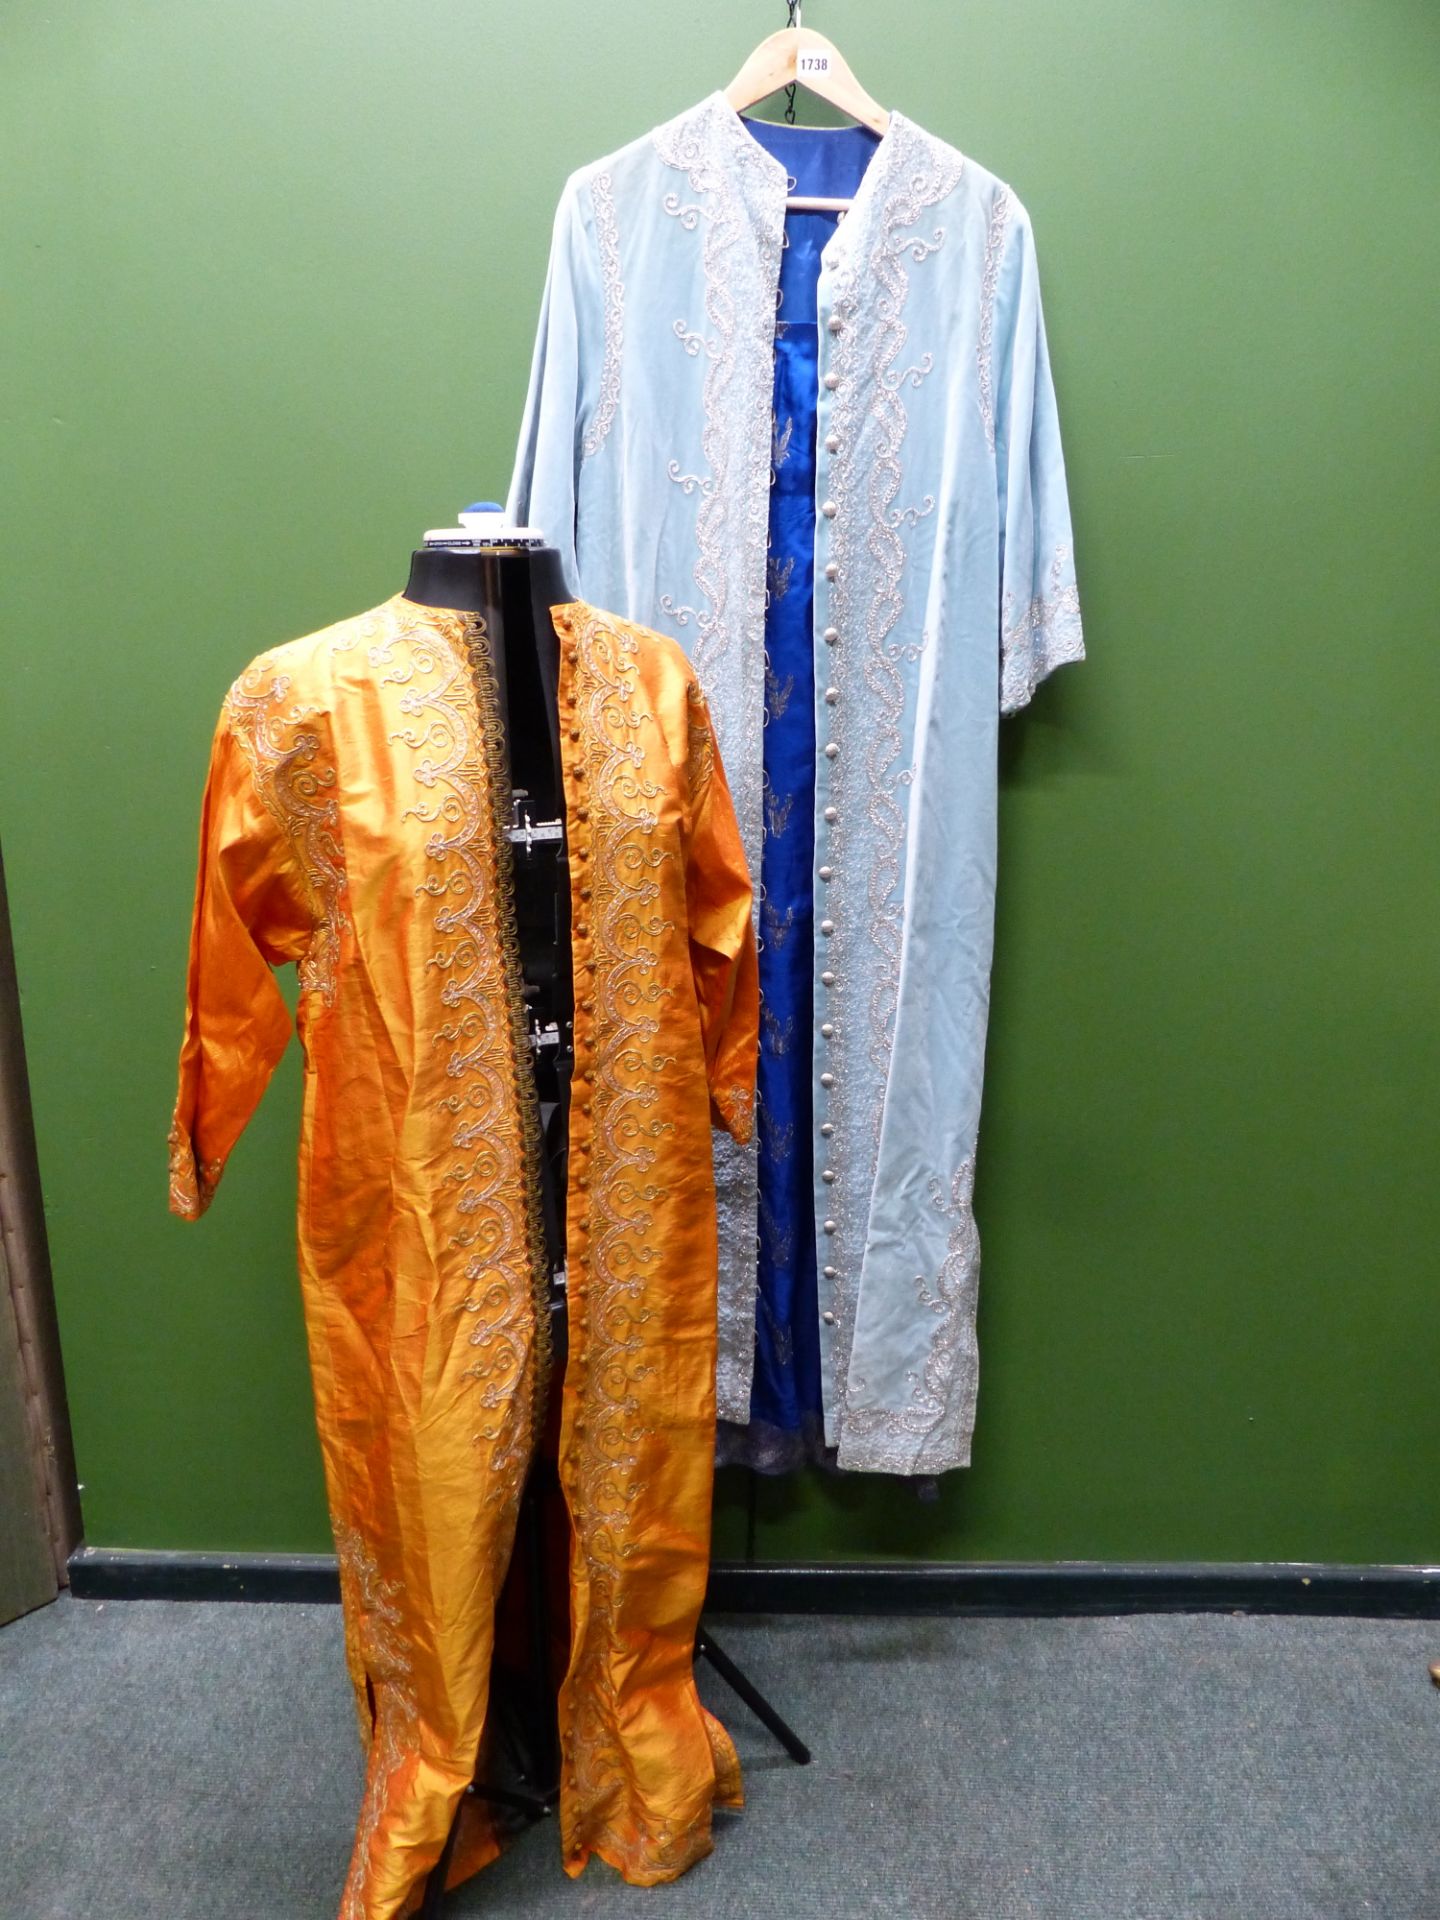 DRESSES. 1960's VELVET KAFTAN AND SILK DRESS. A SILVER KAFTAN WITH SILVER THREAD